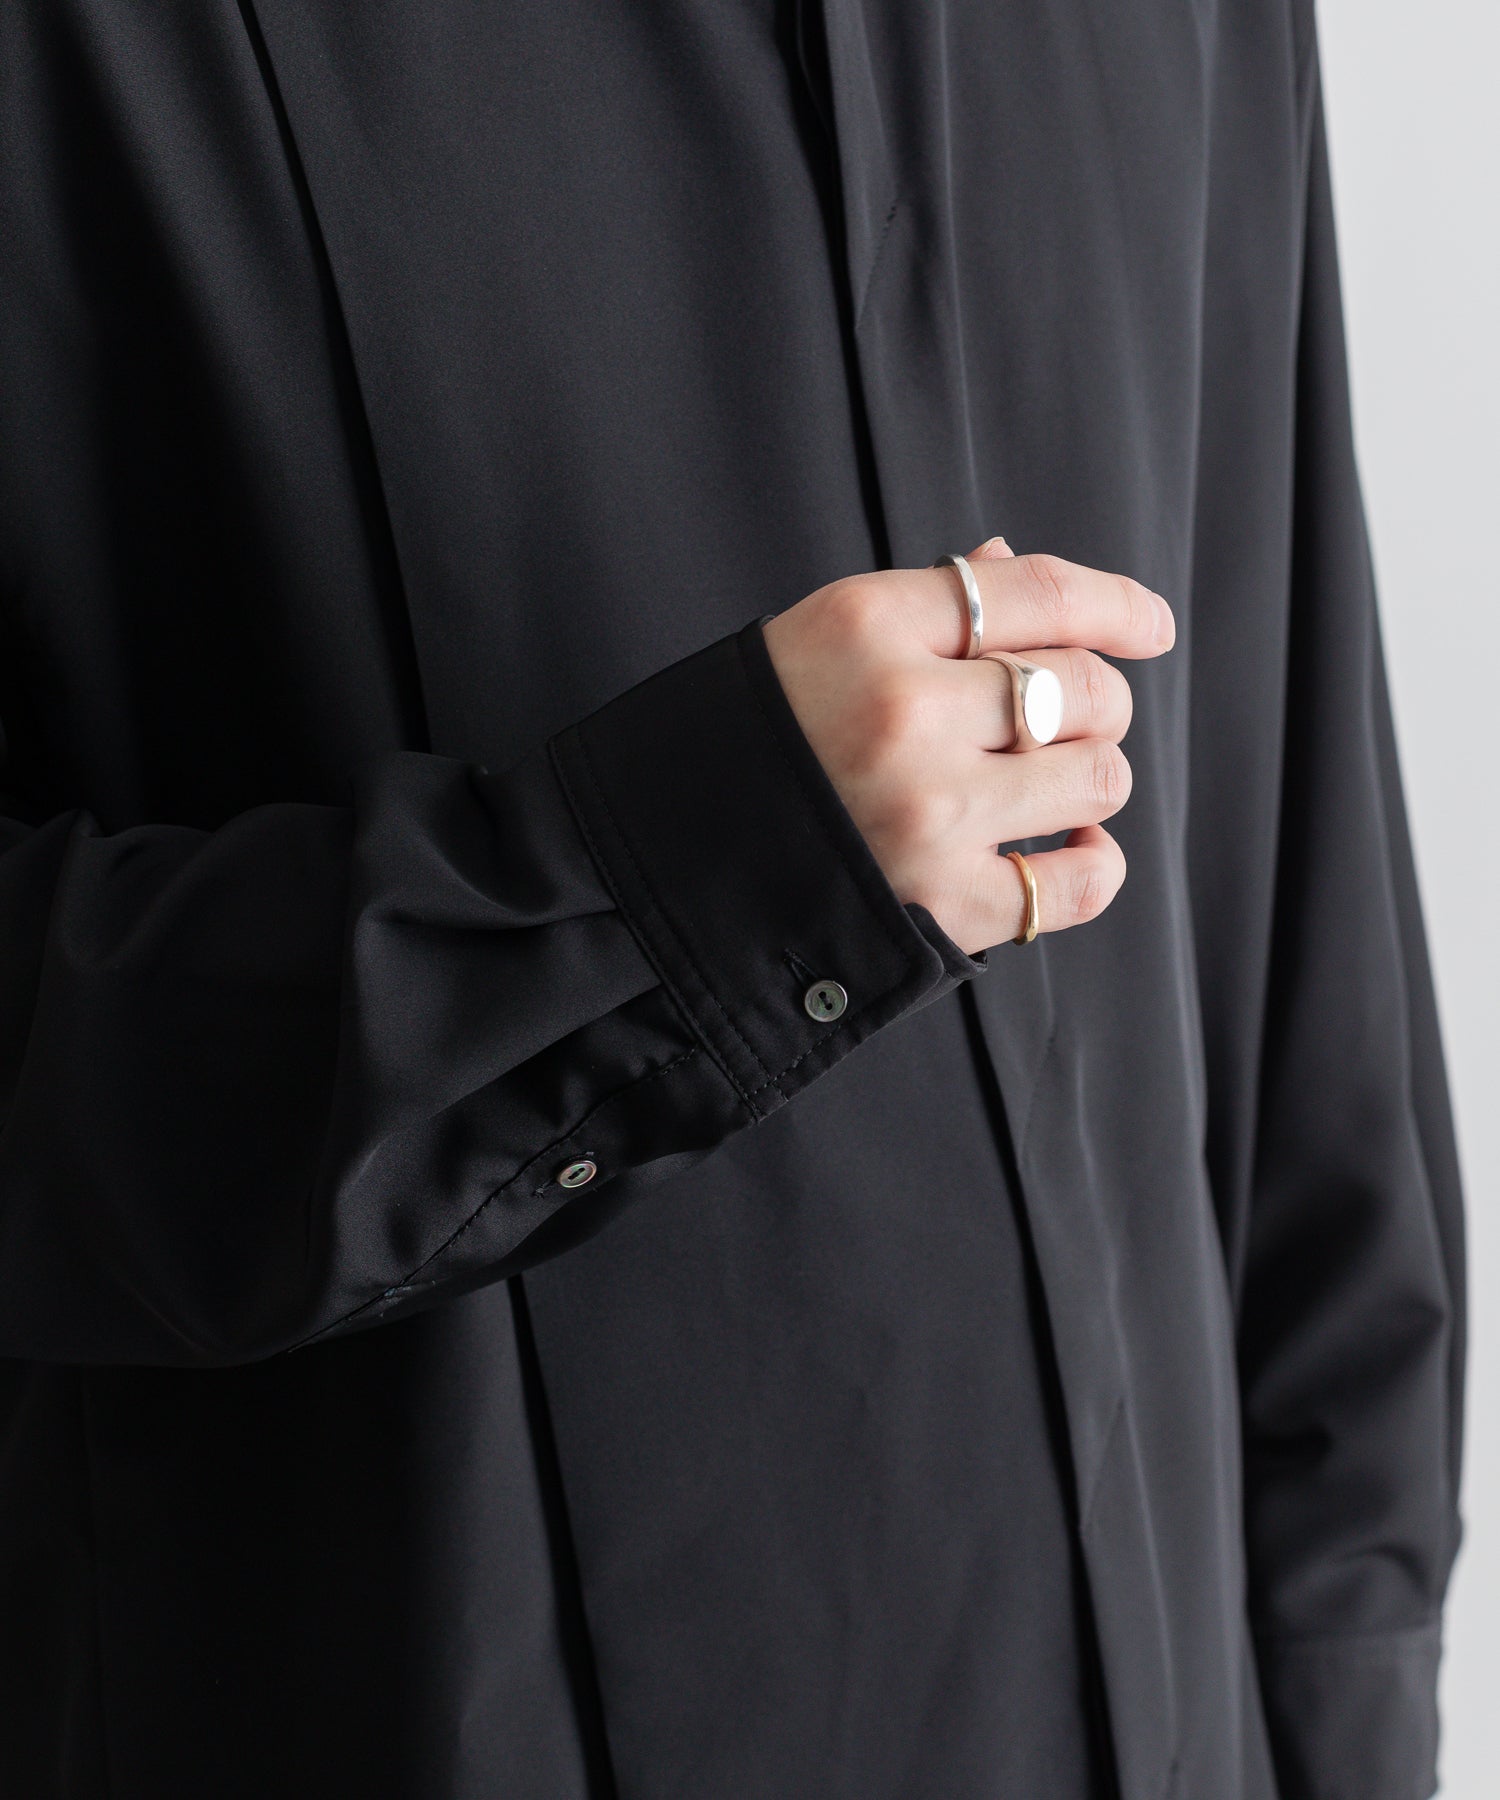 ato(アトウ)のオーバーサイズドノーカラーシャツのブラック 30代ファッション デート服